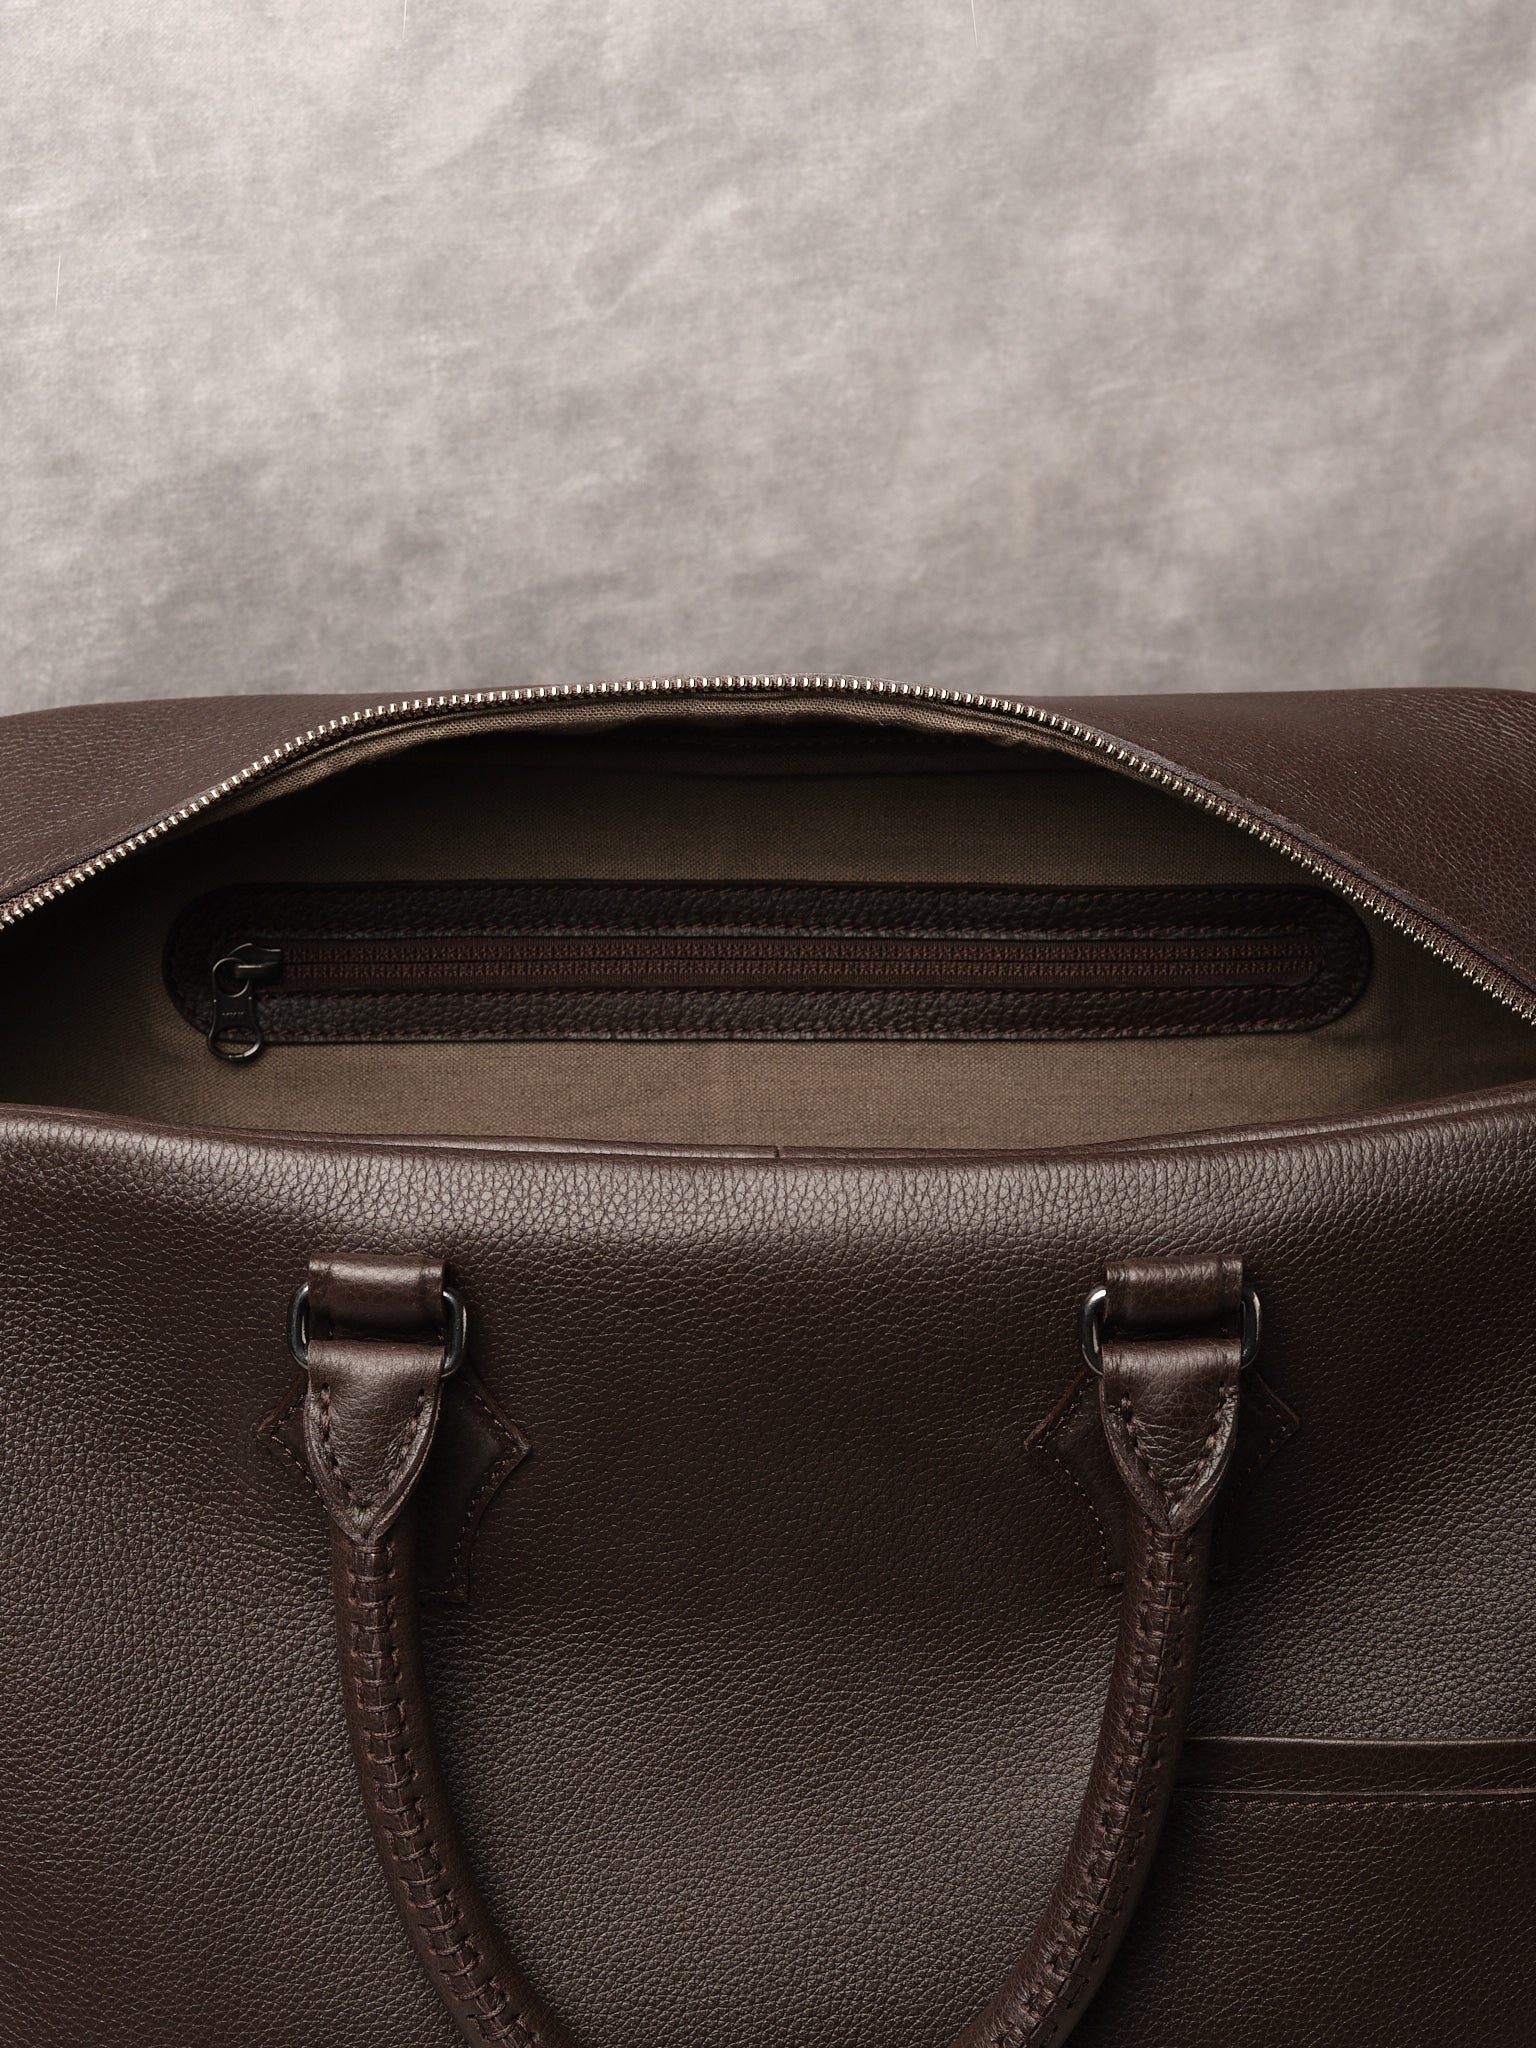 Interior Zipper Pockets. Travel Duffle Bag Dark Brown by Capra Leather